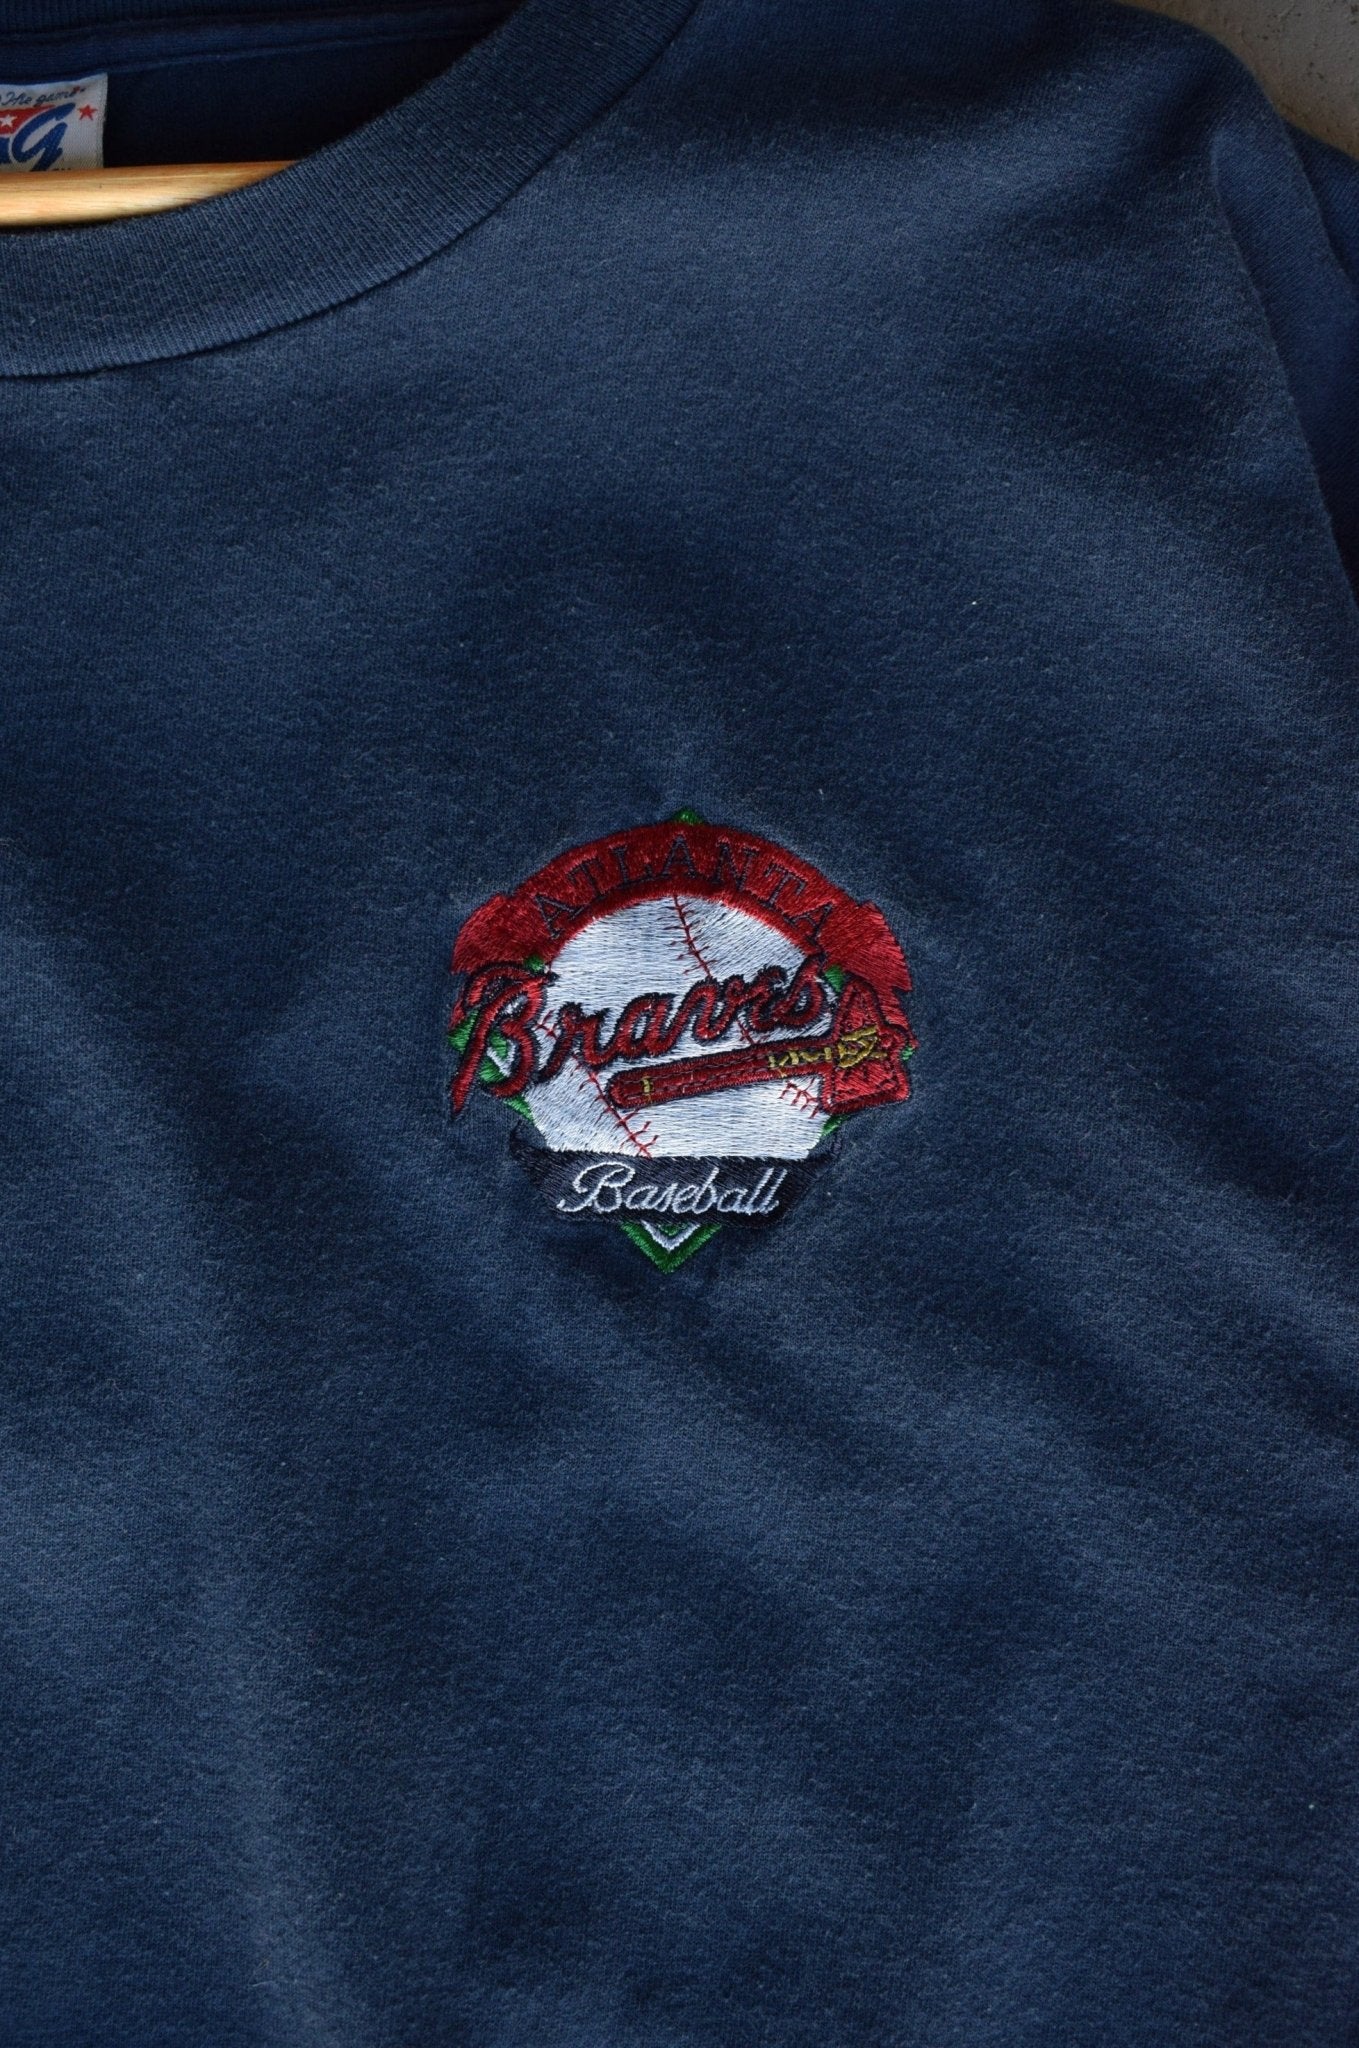 Vintage 90s MLB Atlanta Braves Embroidered Tee (XL) - Retrospective Store